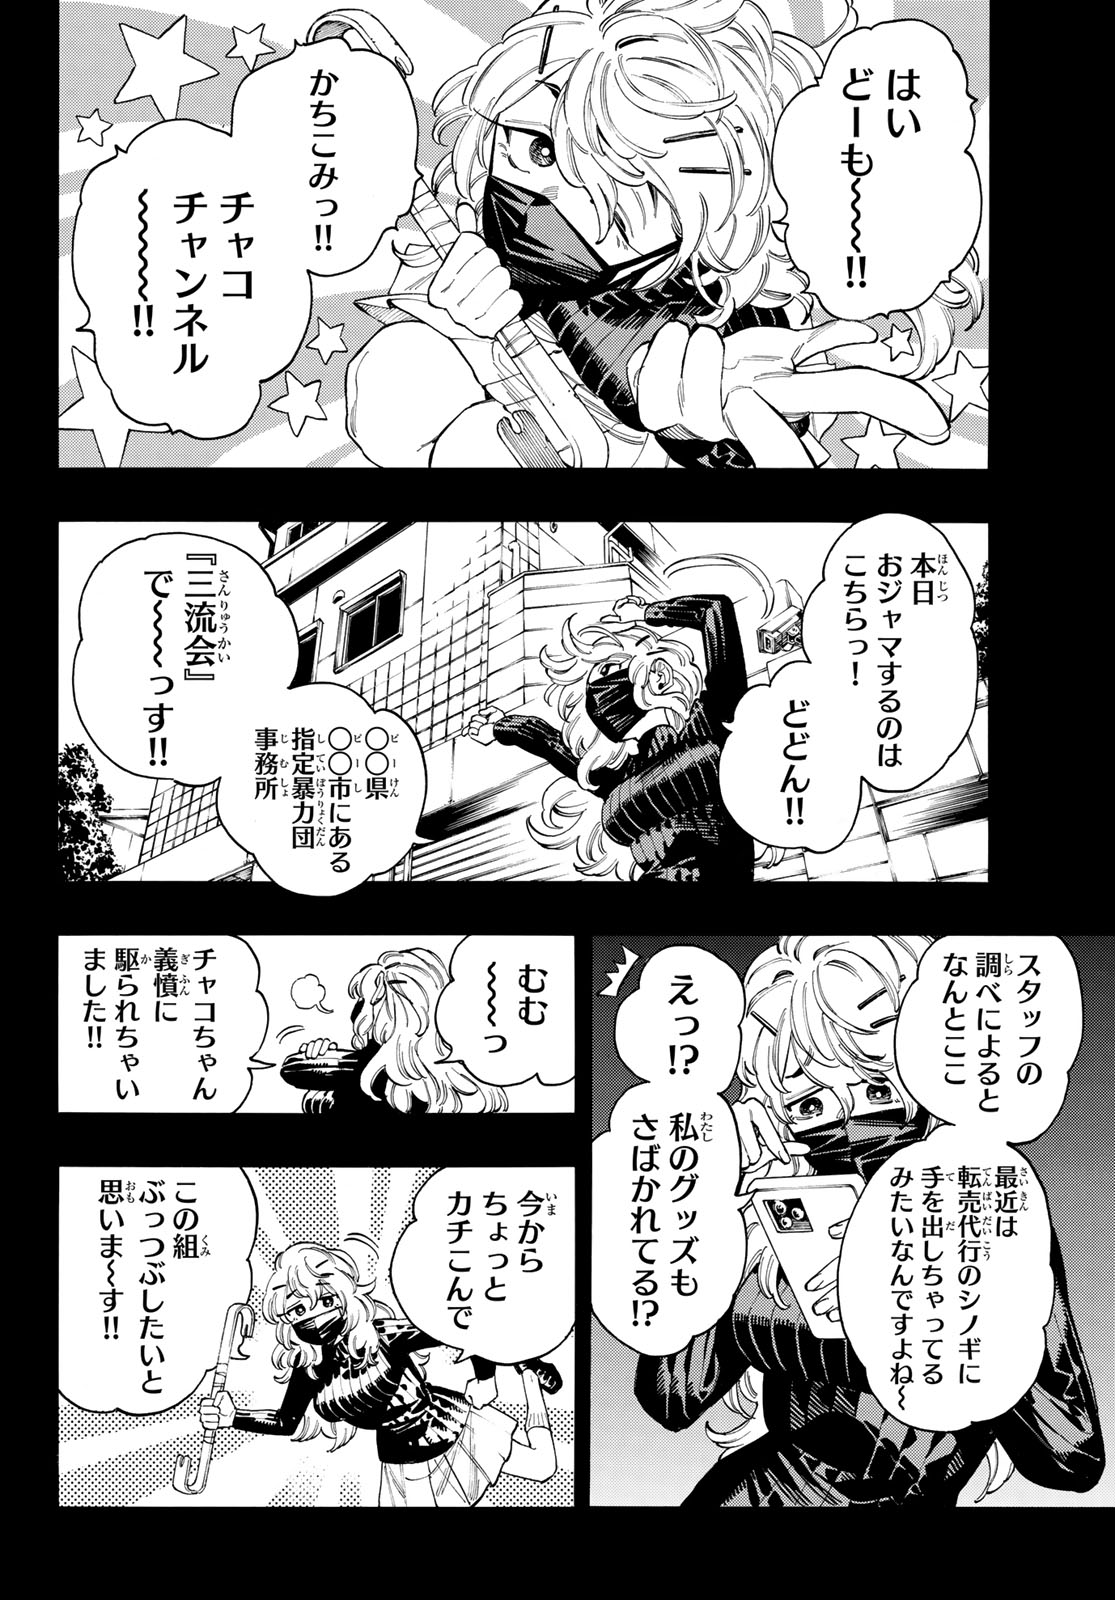 Akabane Honeko no Bodyguard - Chapter 82 - Page 10